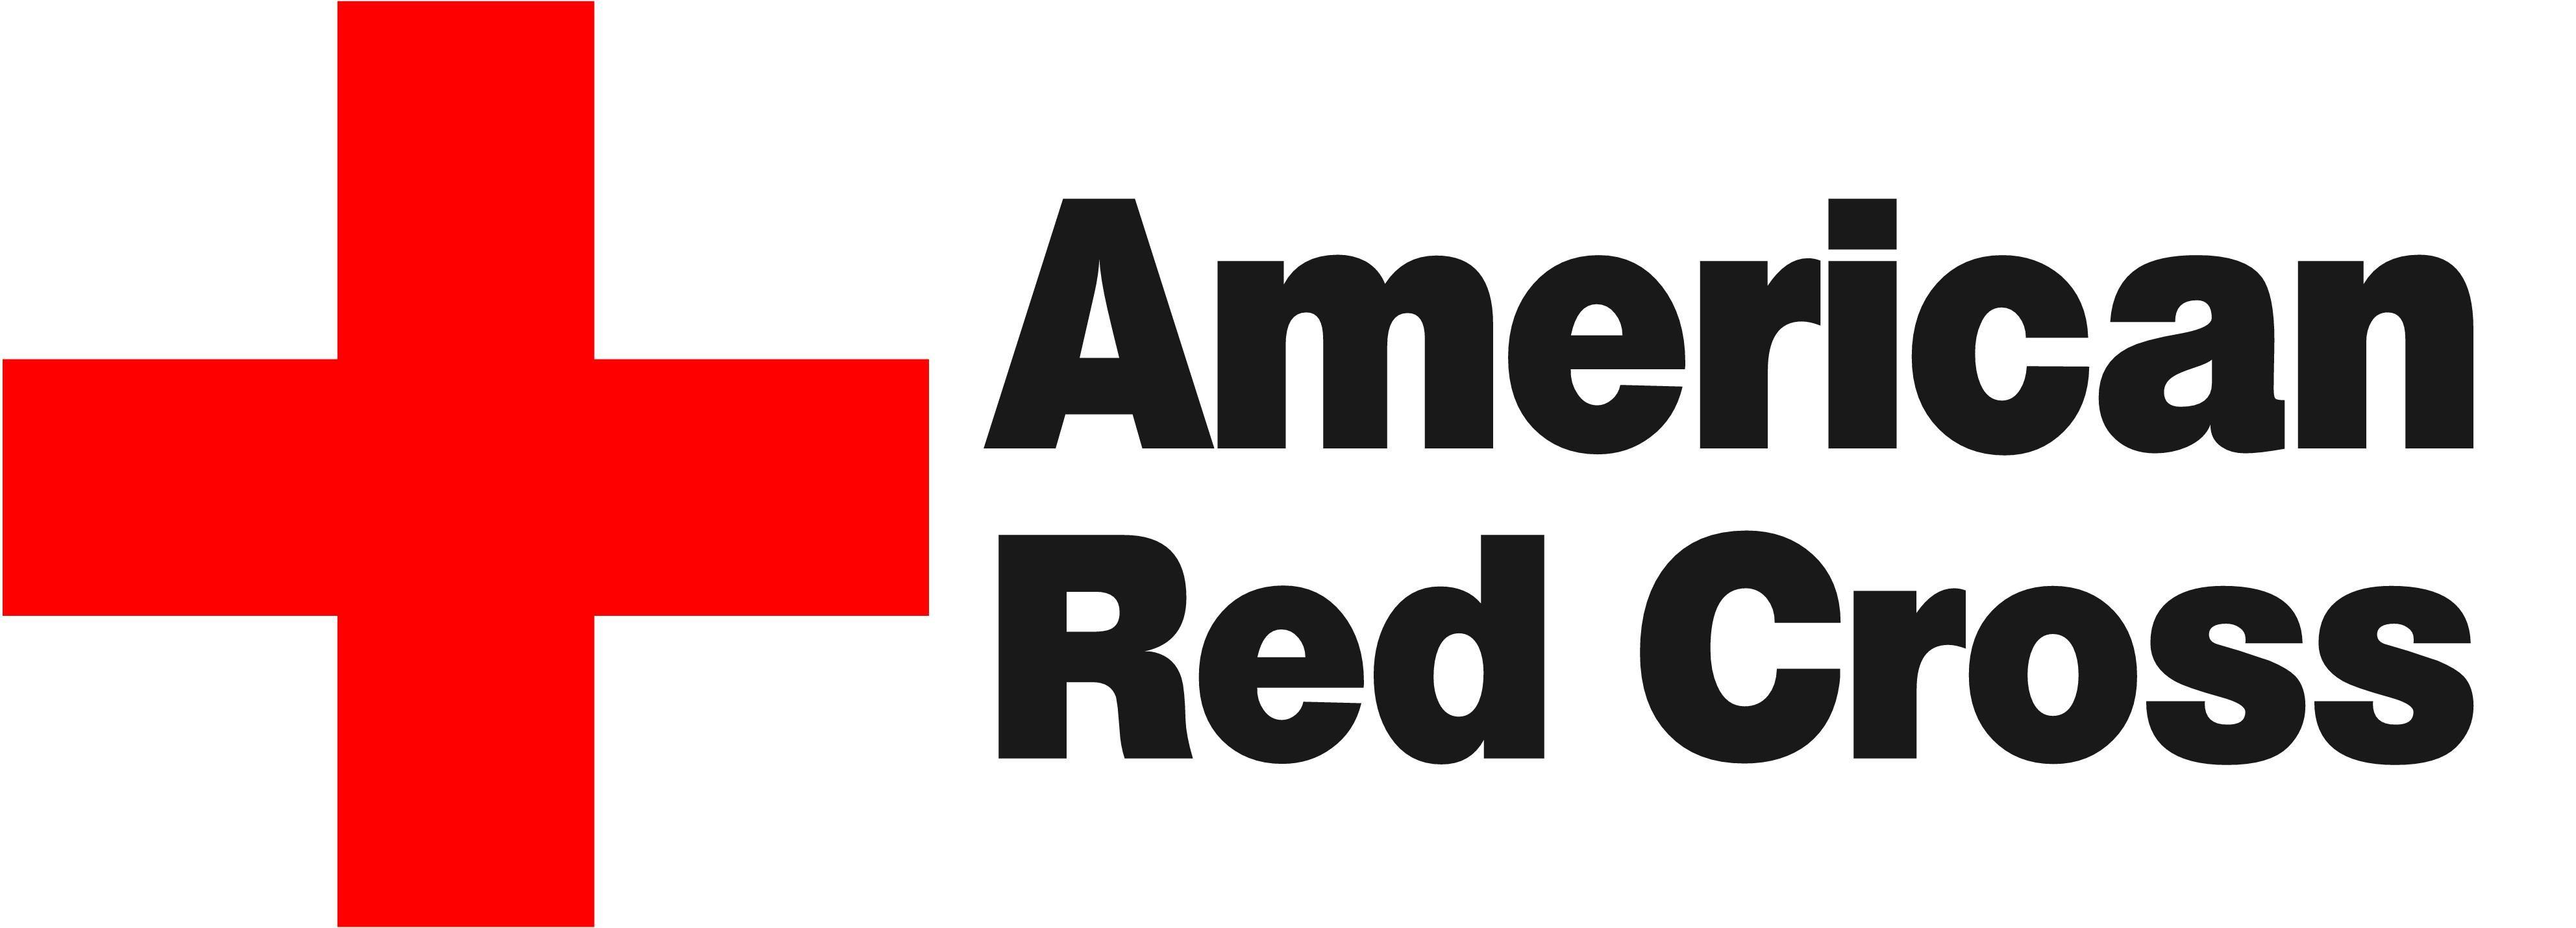 Red Cross Lifeguard Logo - American Red Cross Training